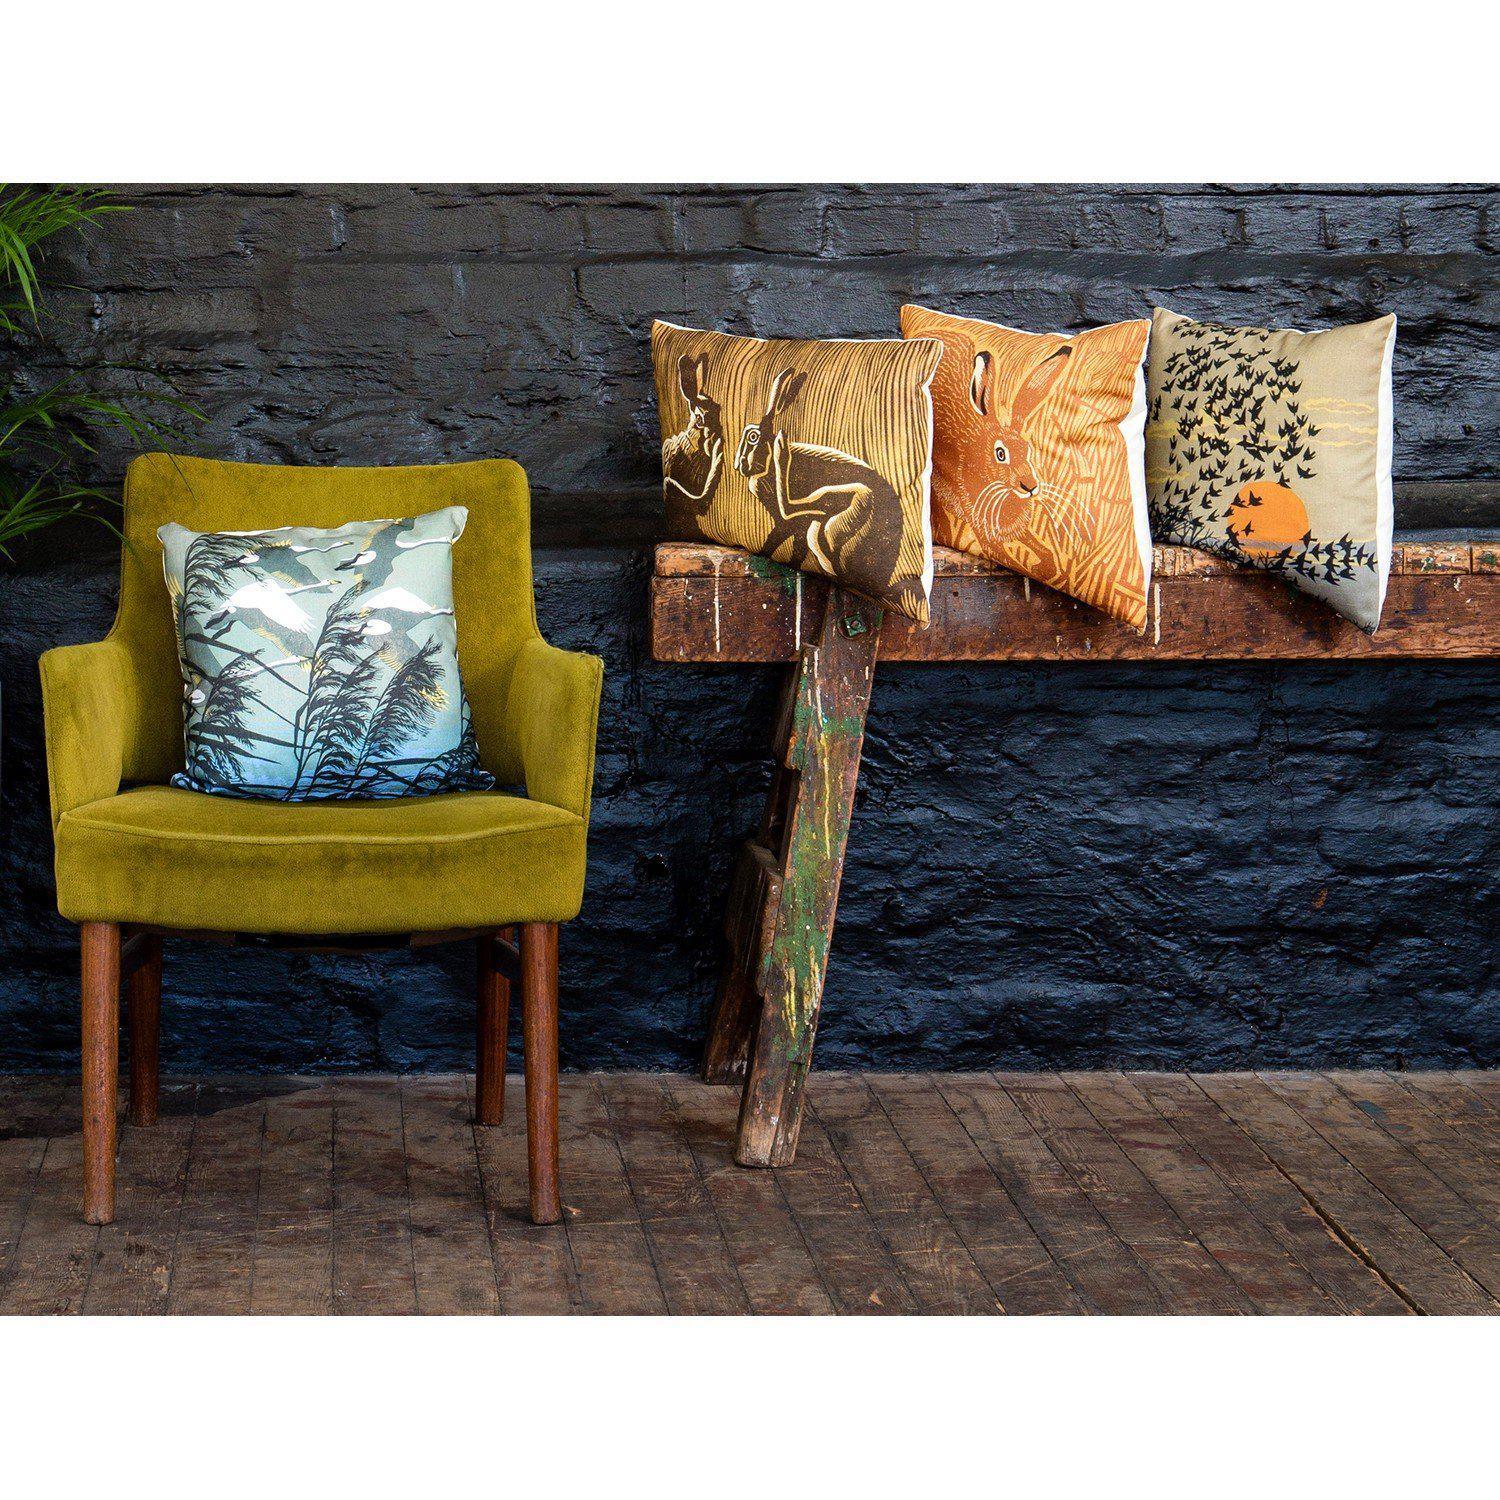 Startling Stories - Pulp Fiction Cushion - Handmade Cushions UK - WeLoveCushions